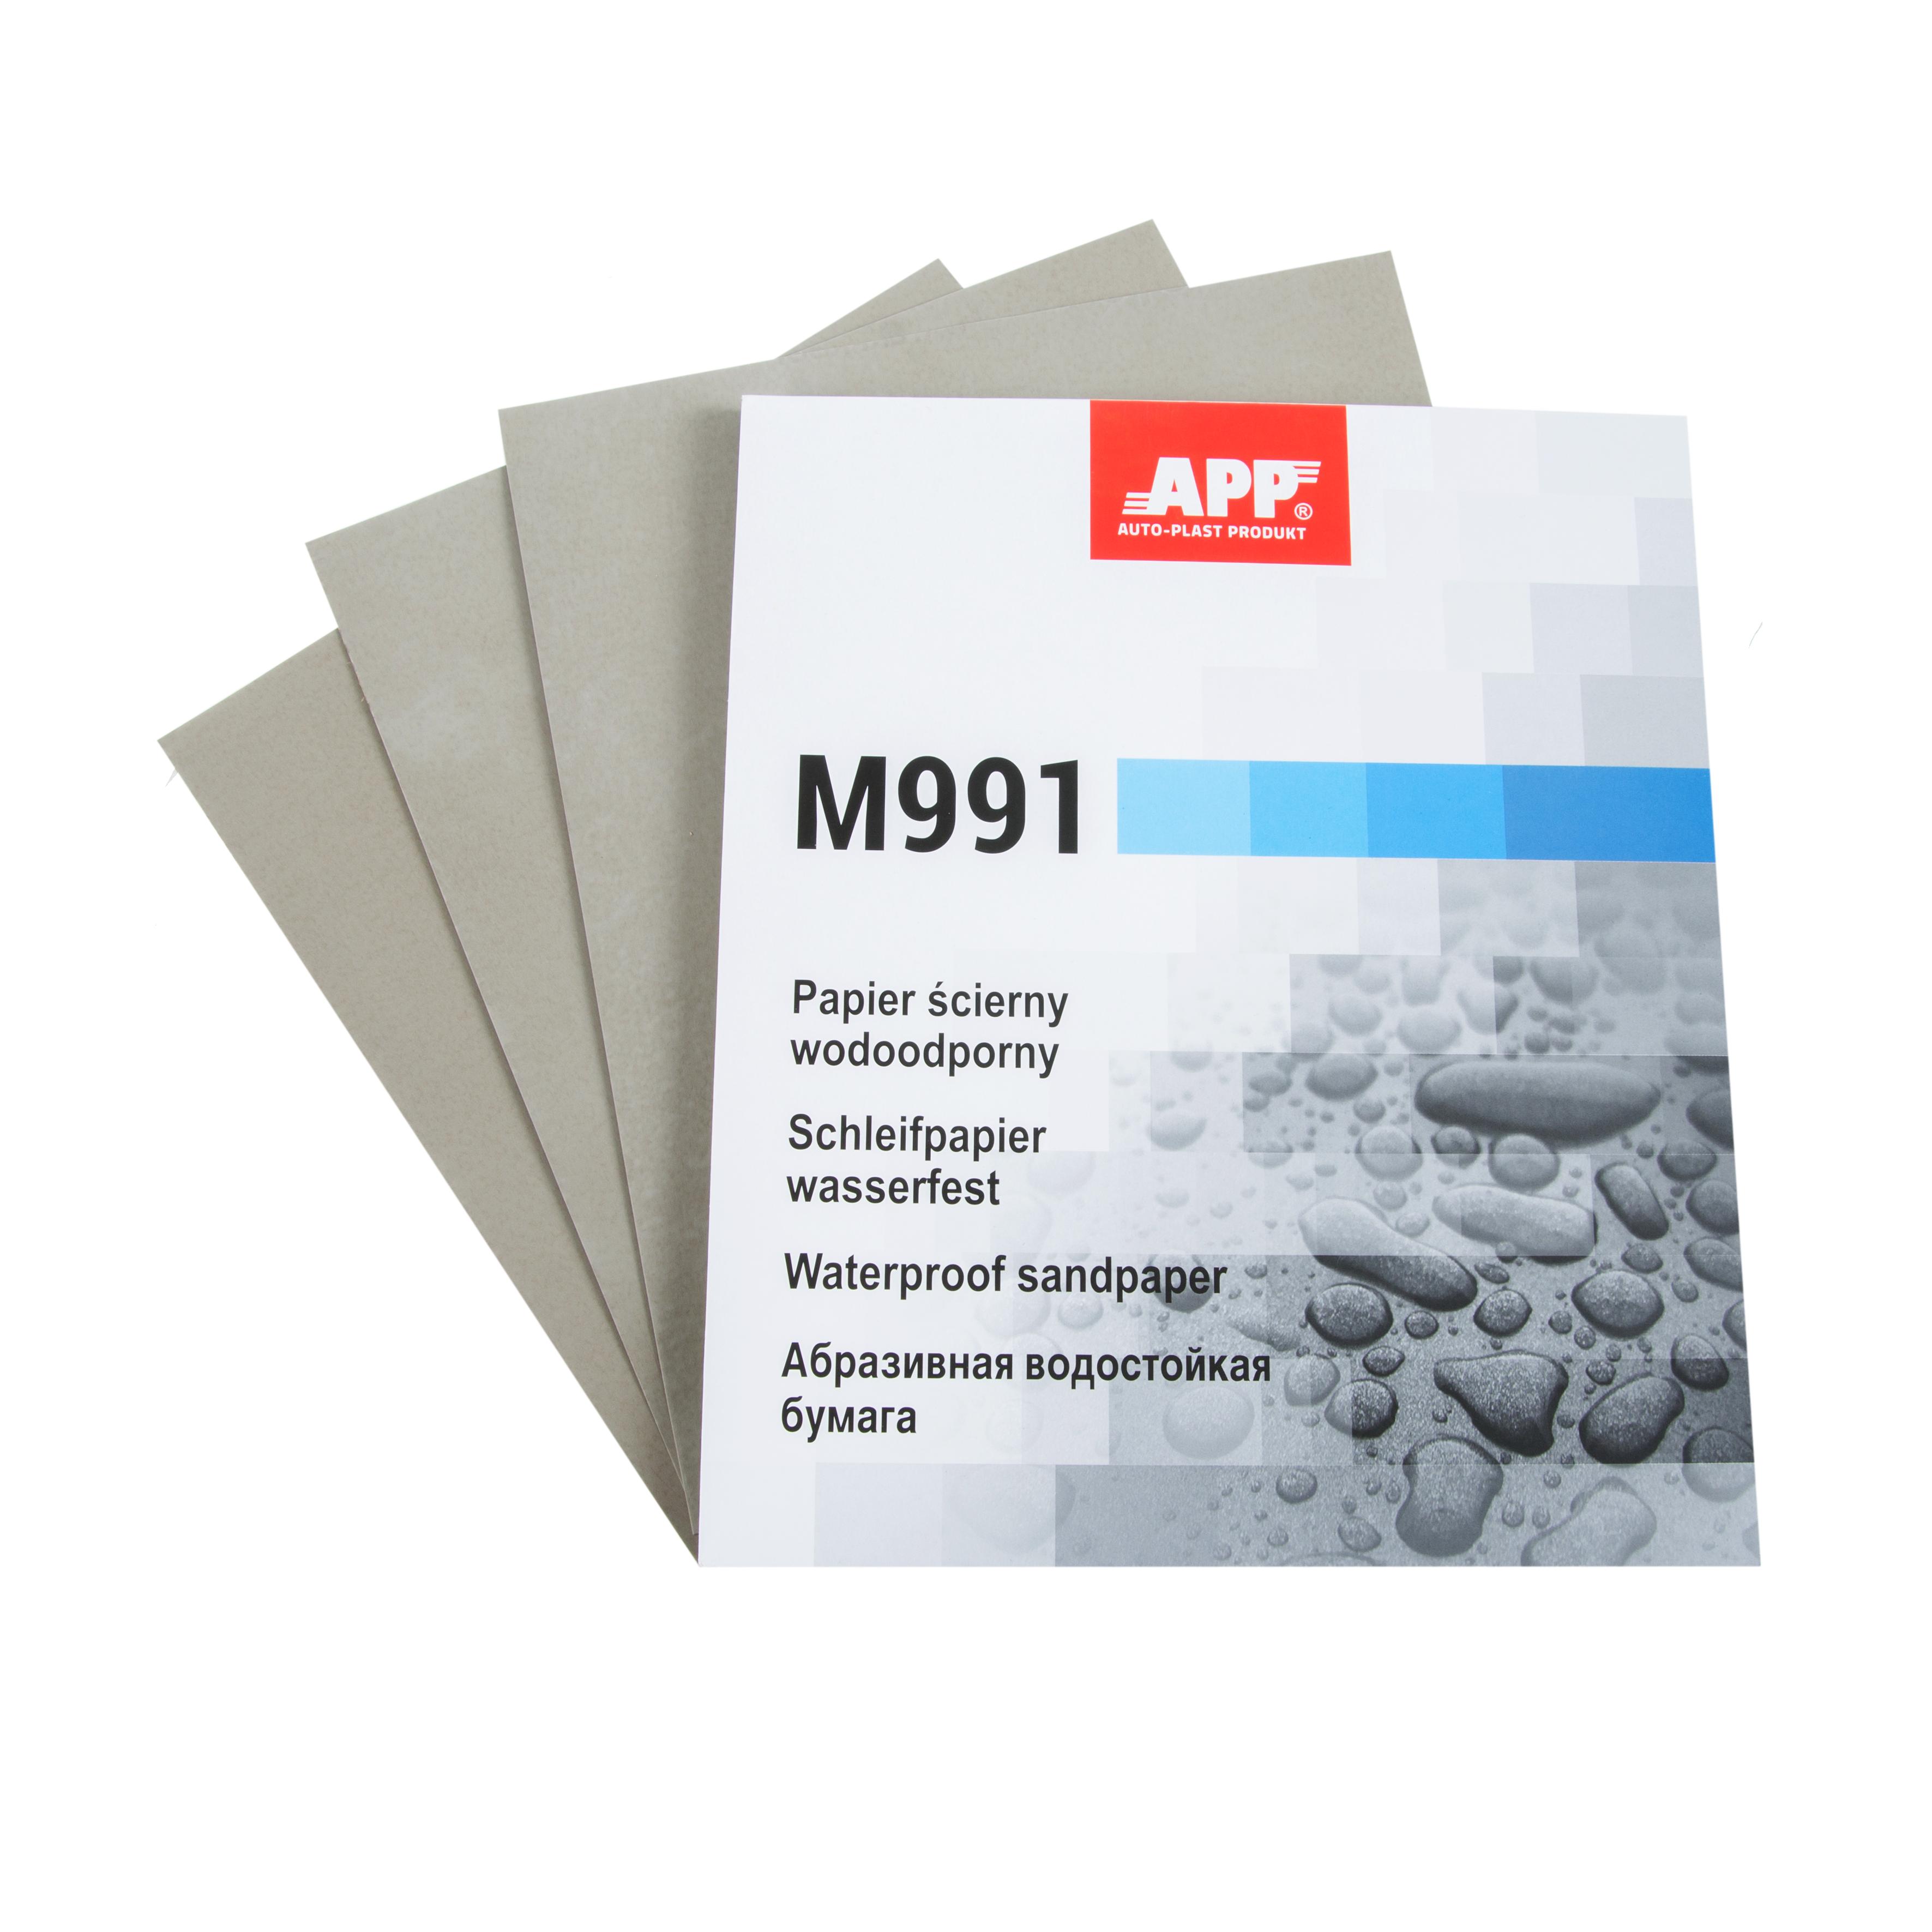 APP 40MW5000 Schleifpapier M991 wasserfest P5000 blau 230 mm x 280 mm 50 Stück | Wasserschleifpapier WP waterproof Blätter Sheets